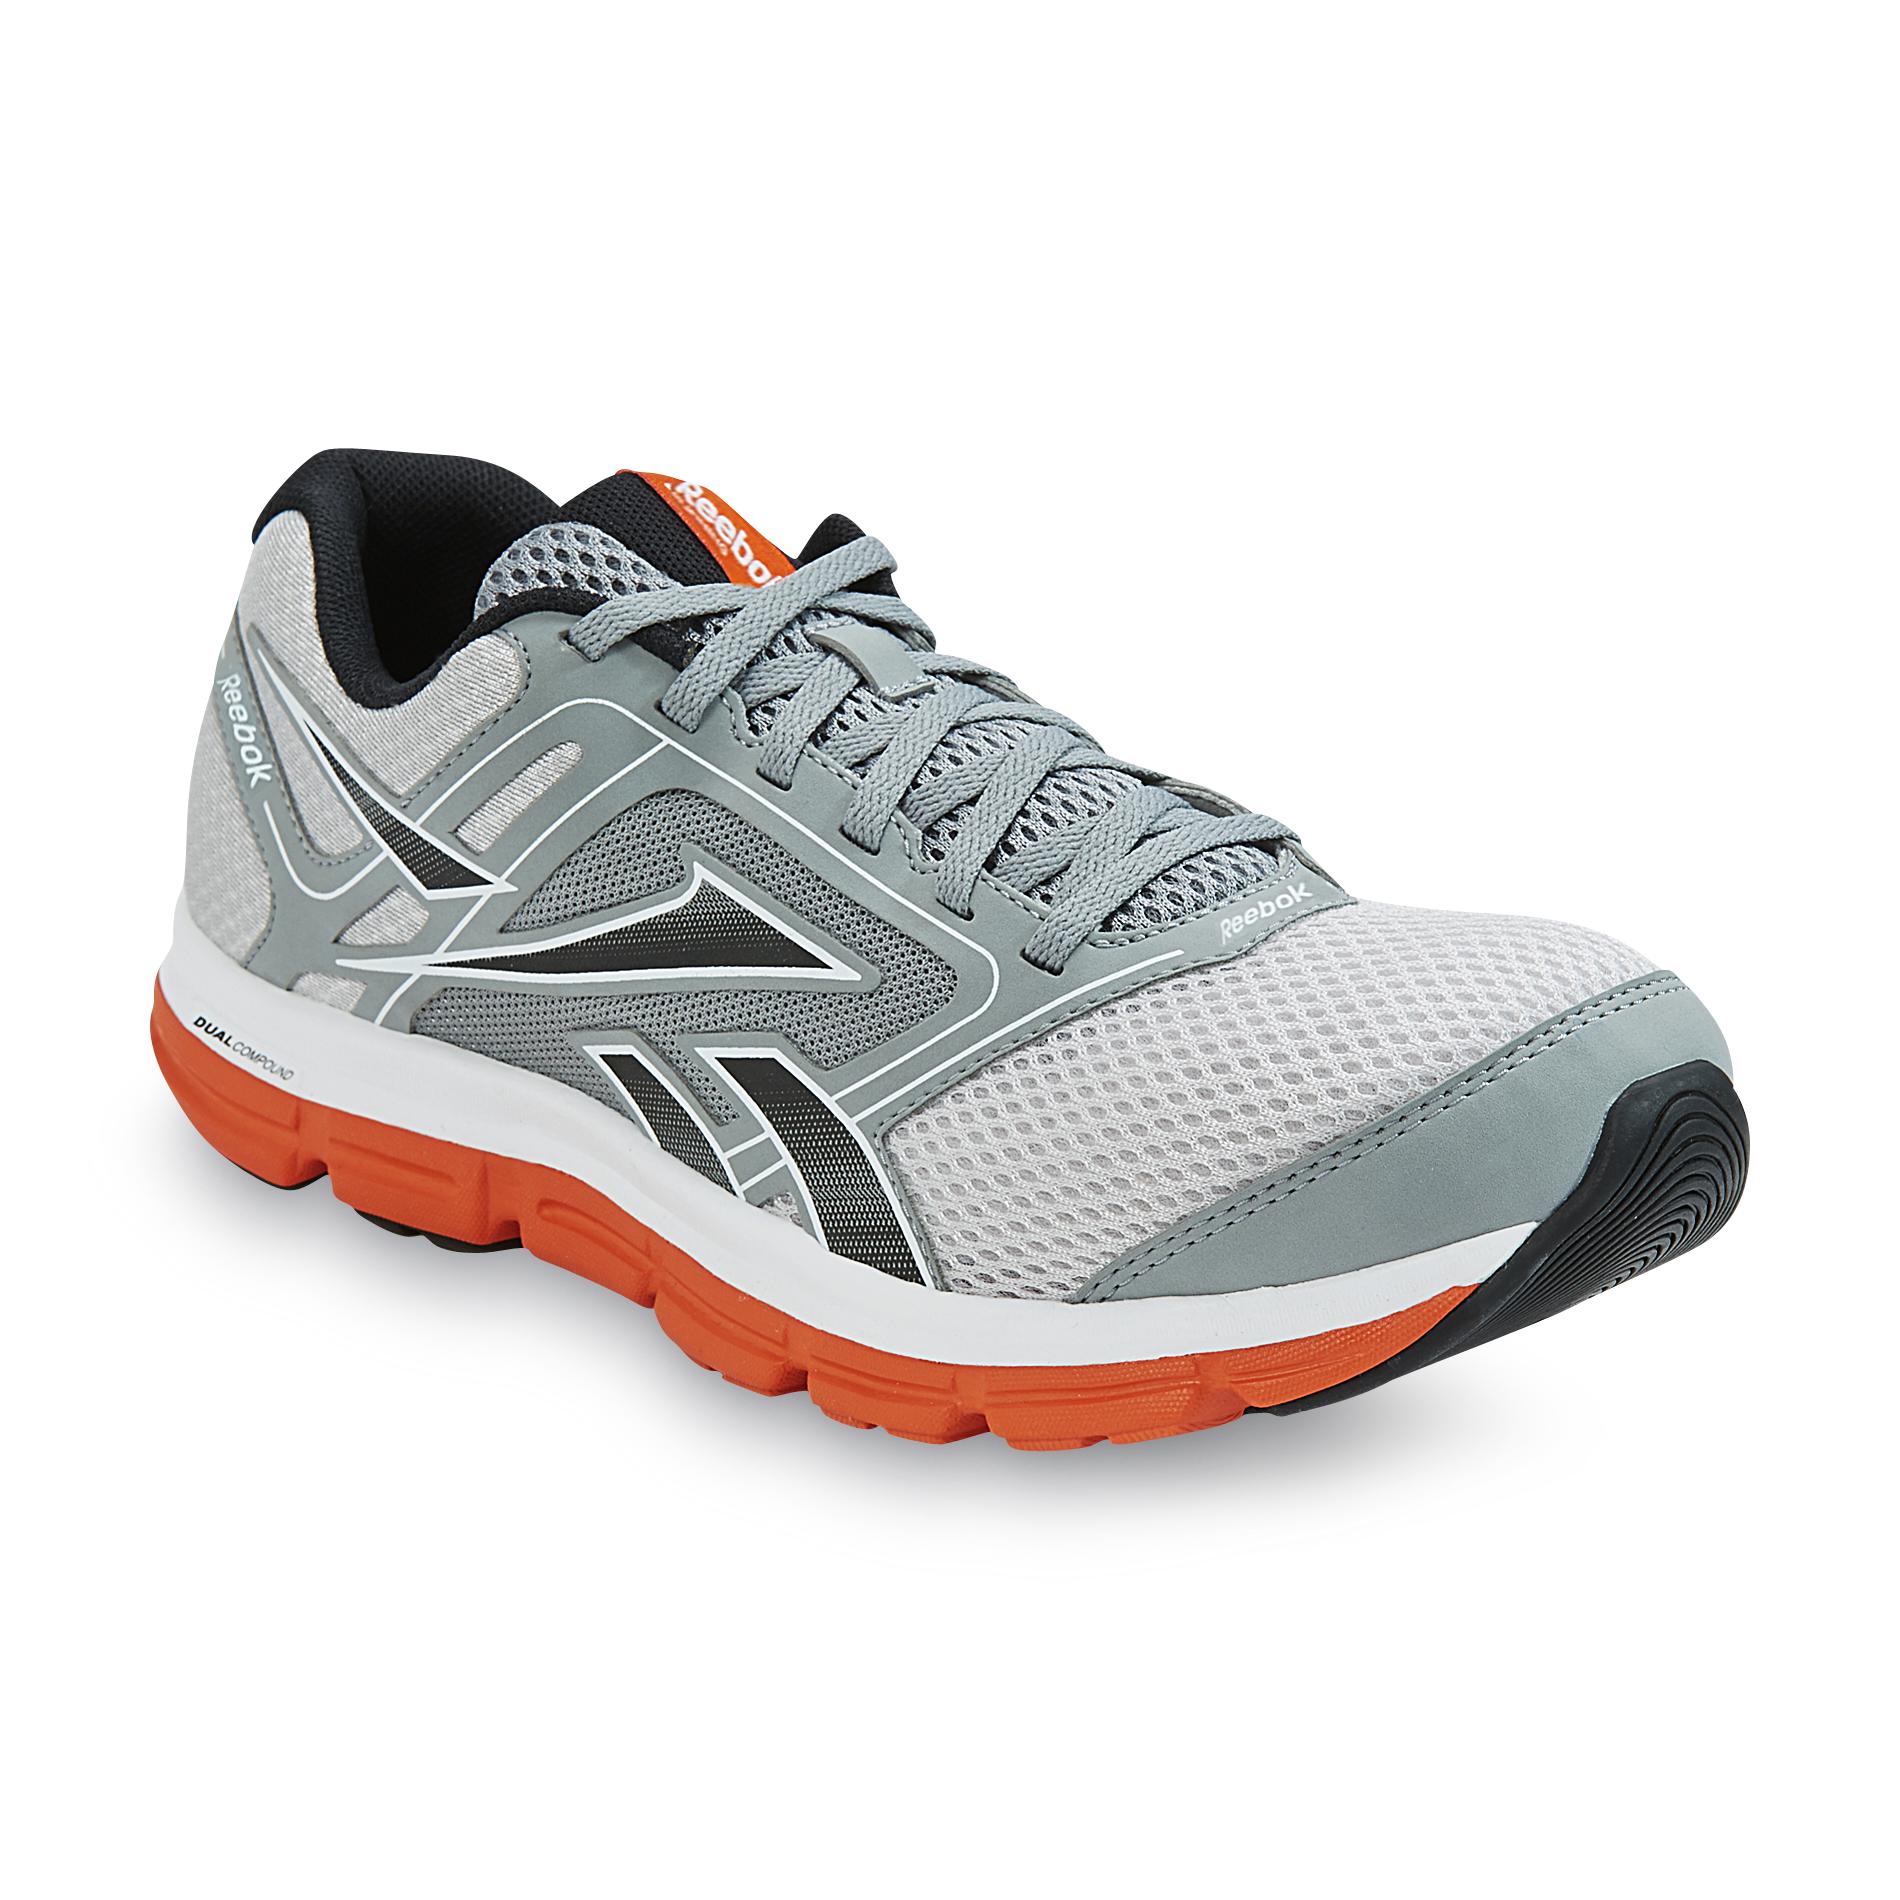 Reebok Men's Dual Turbo Fire Gray Running Athletic Shoe